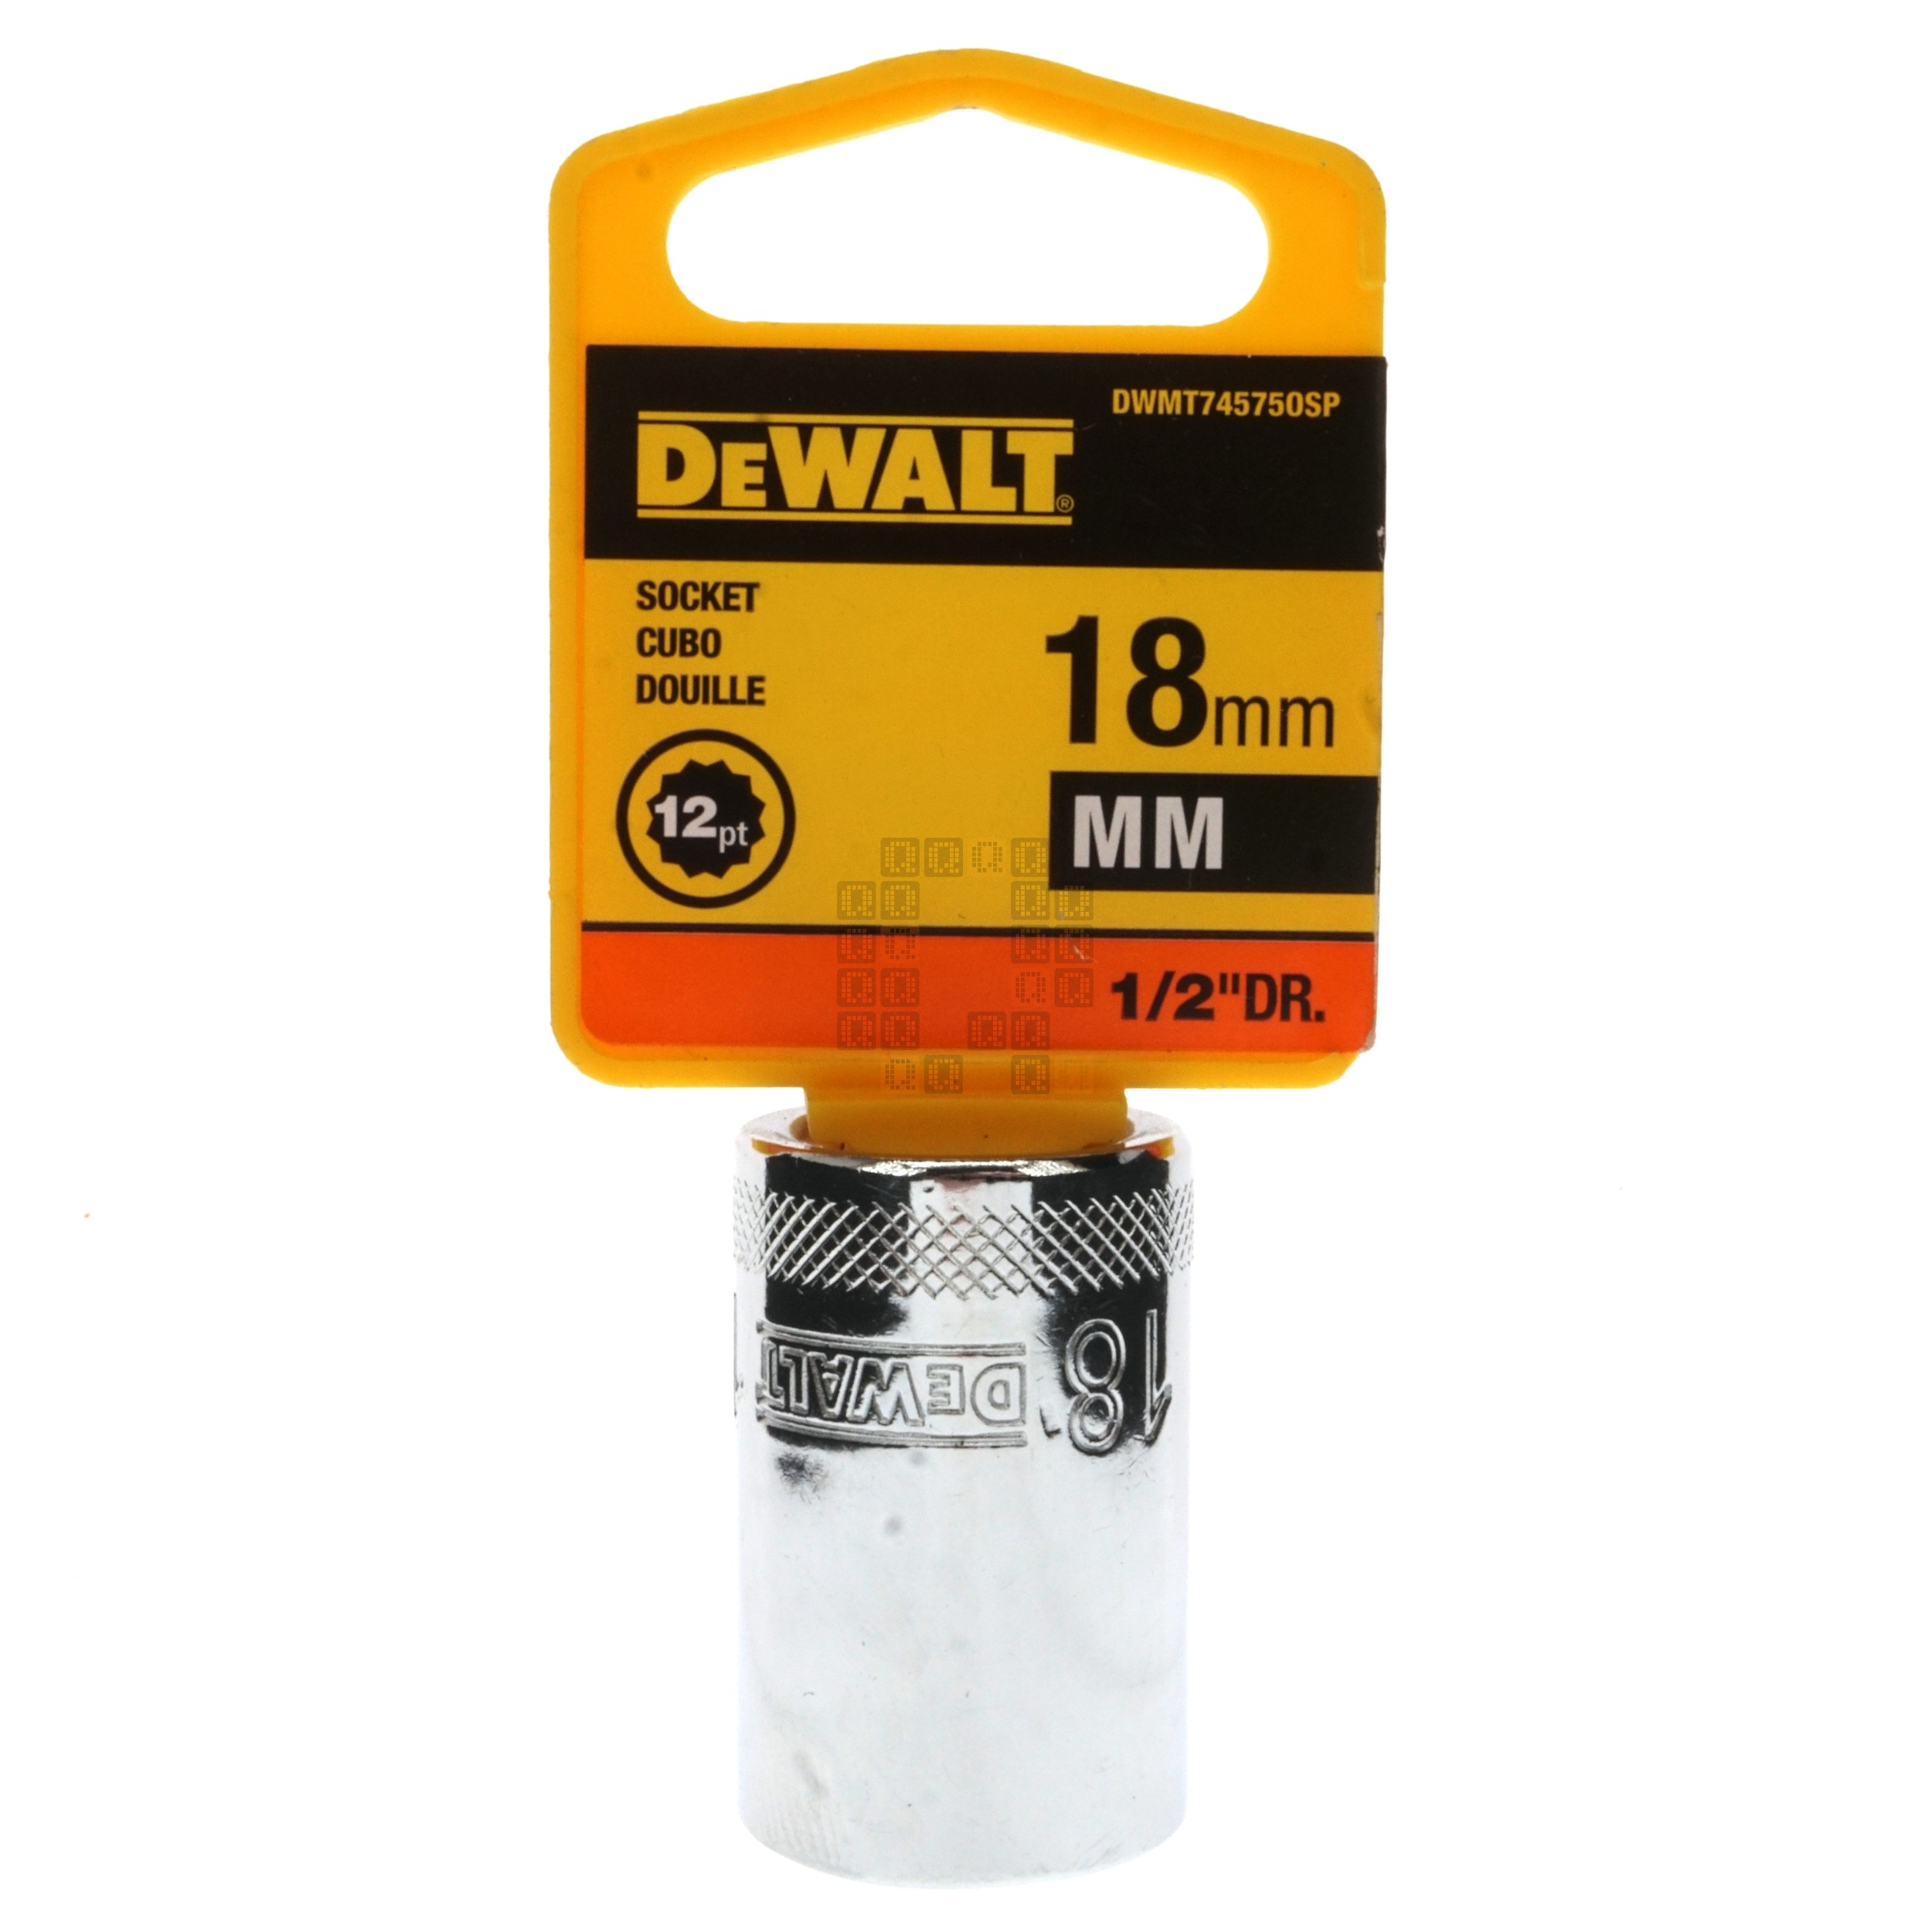 DeWALT DWMT74575OSP 18mm Metric Chrome Socket, 1/2" Drive, 74-575D 12-Point